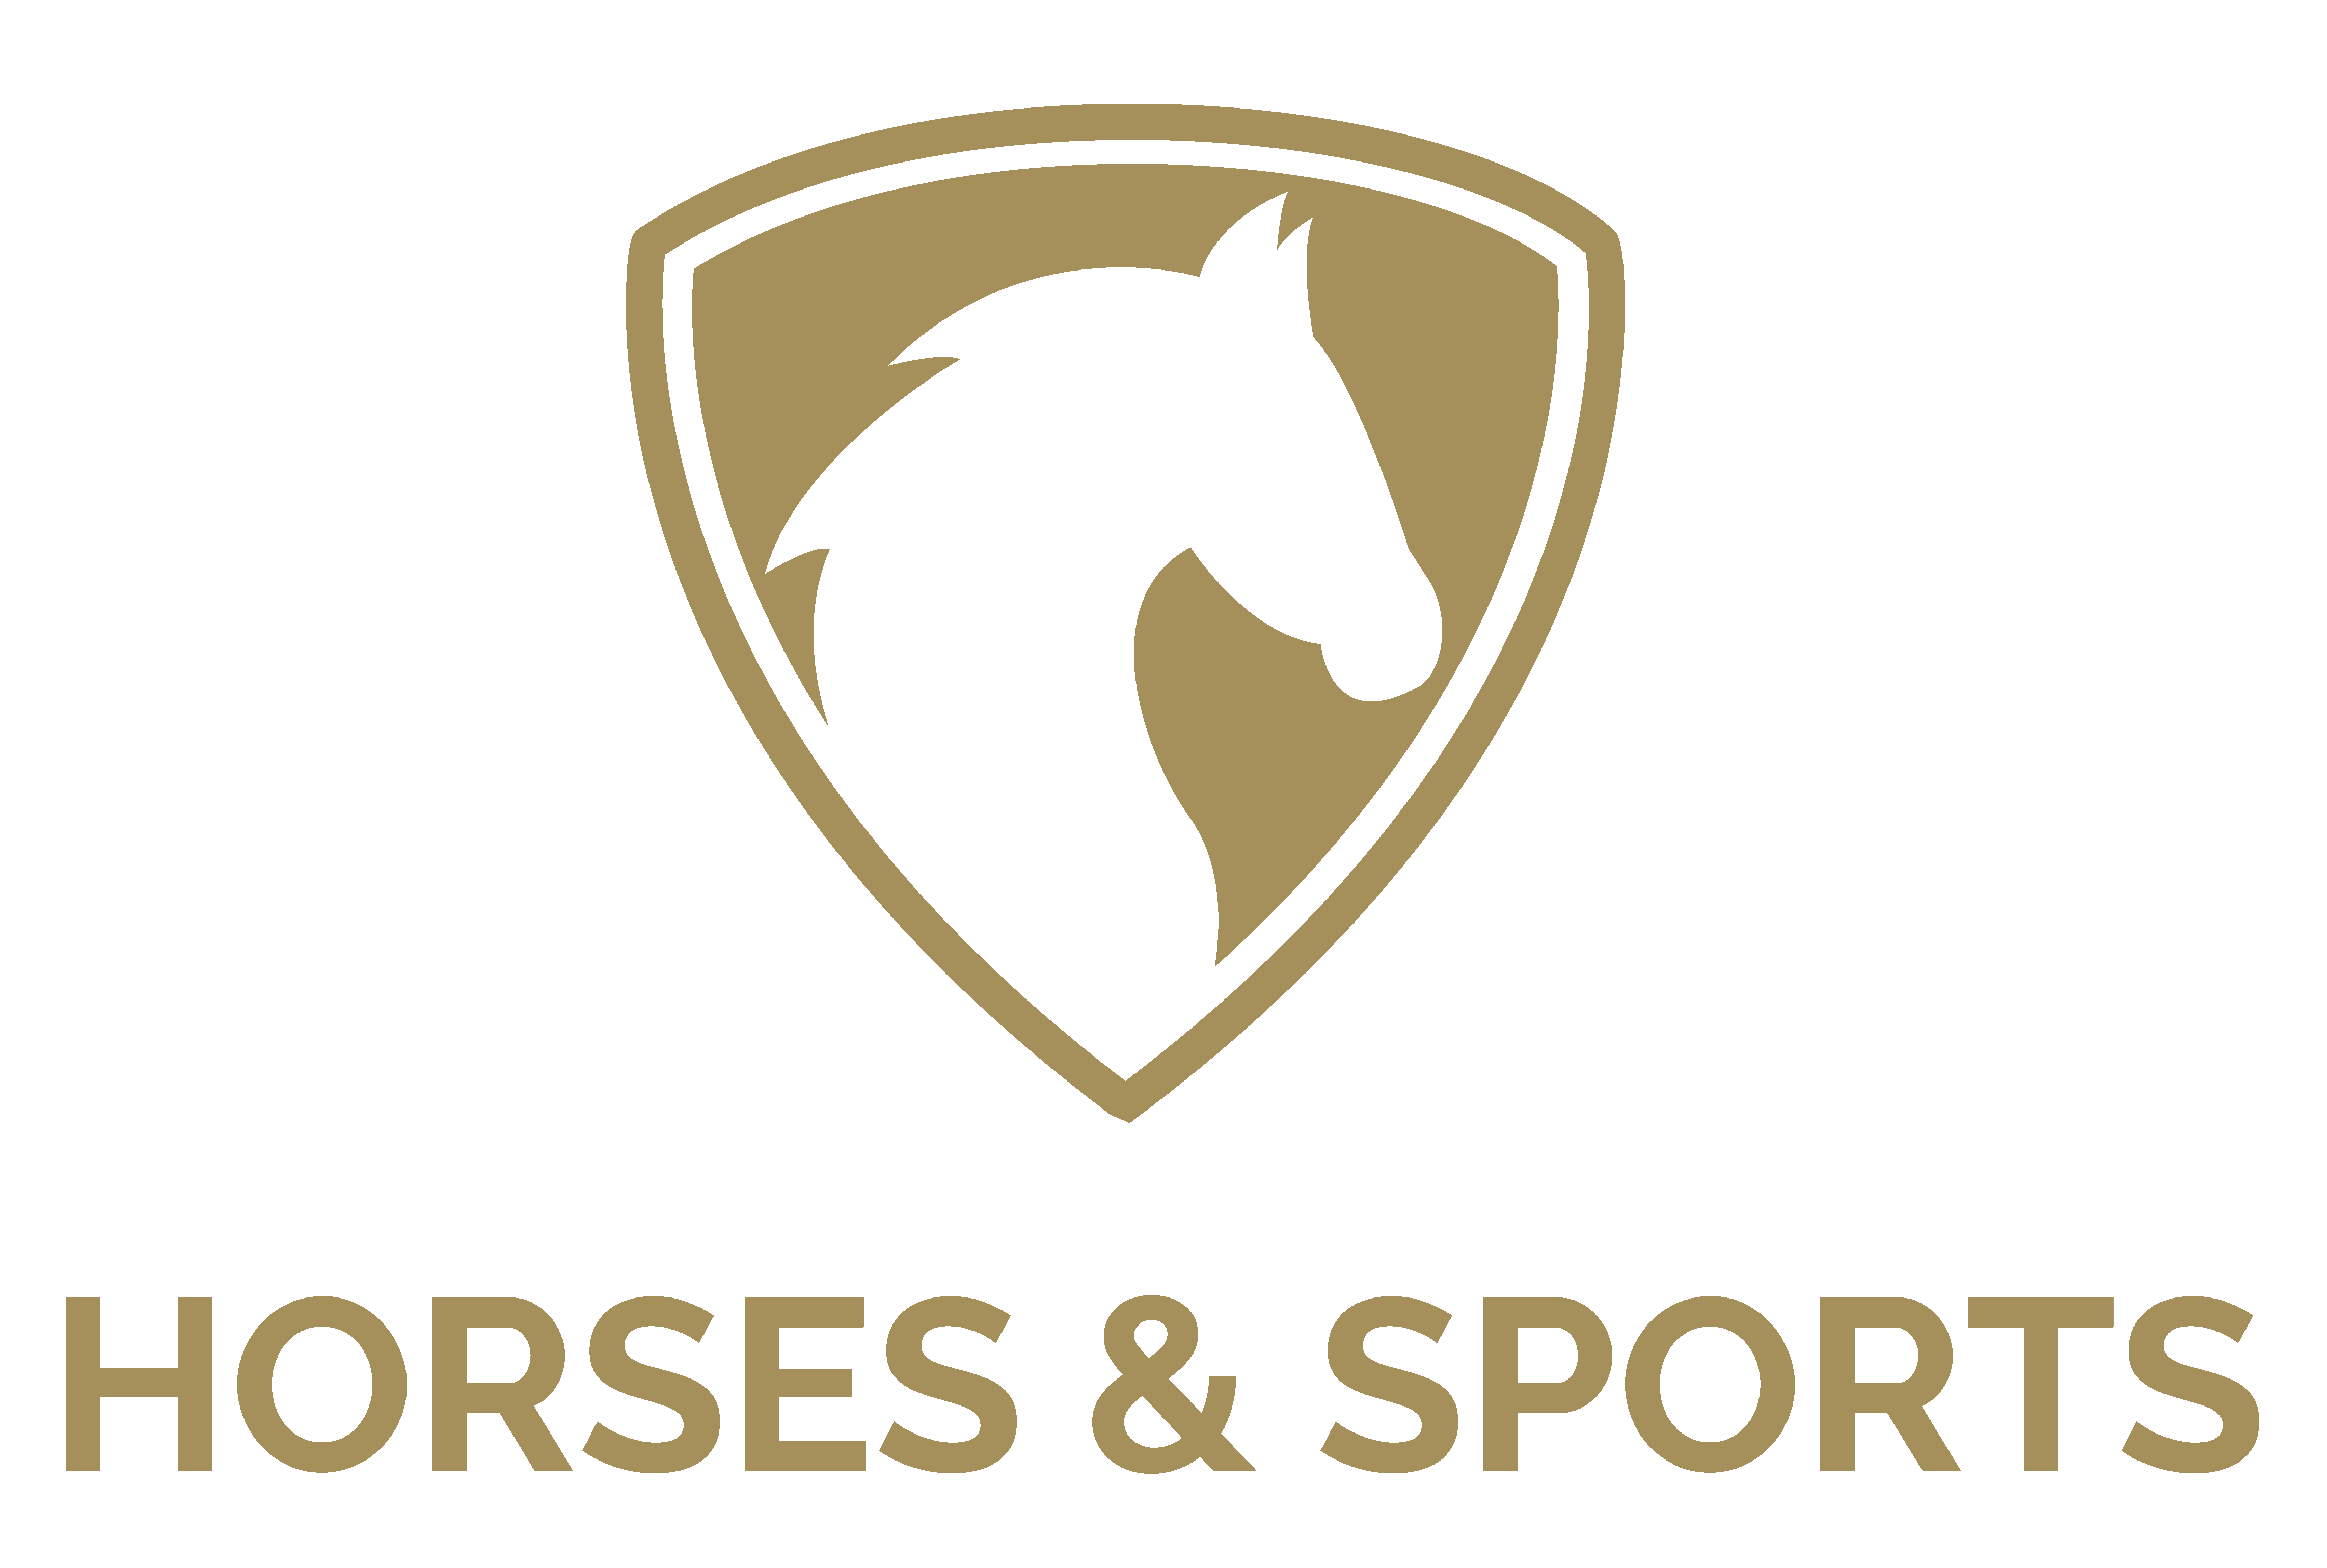 HORSES & SPORTS